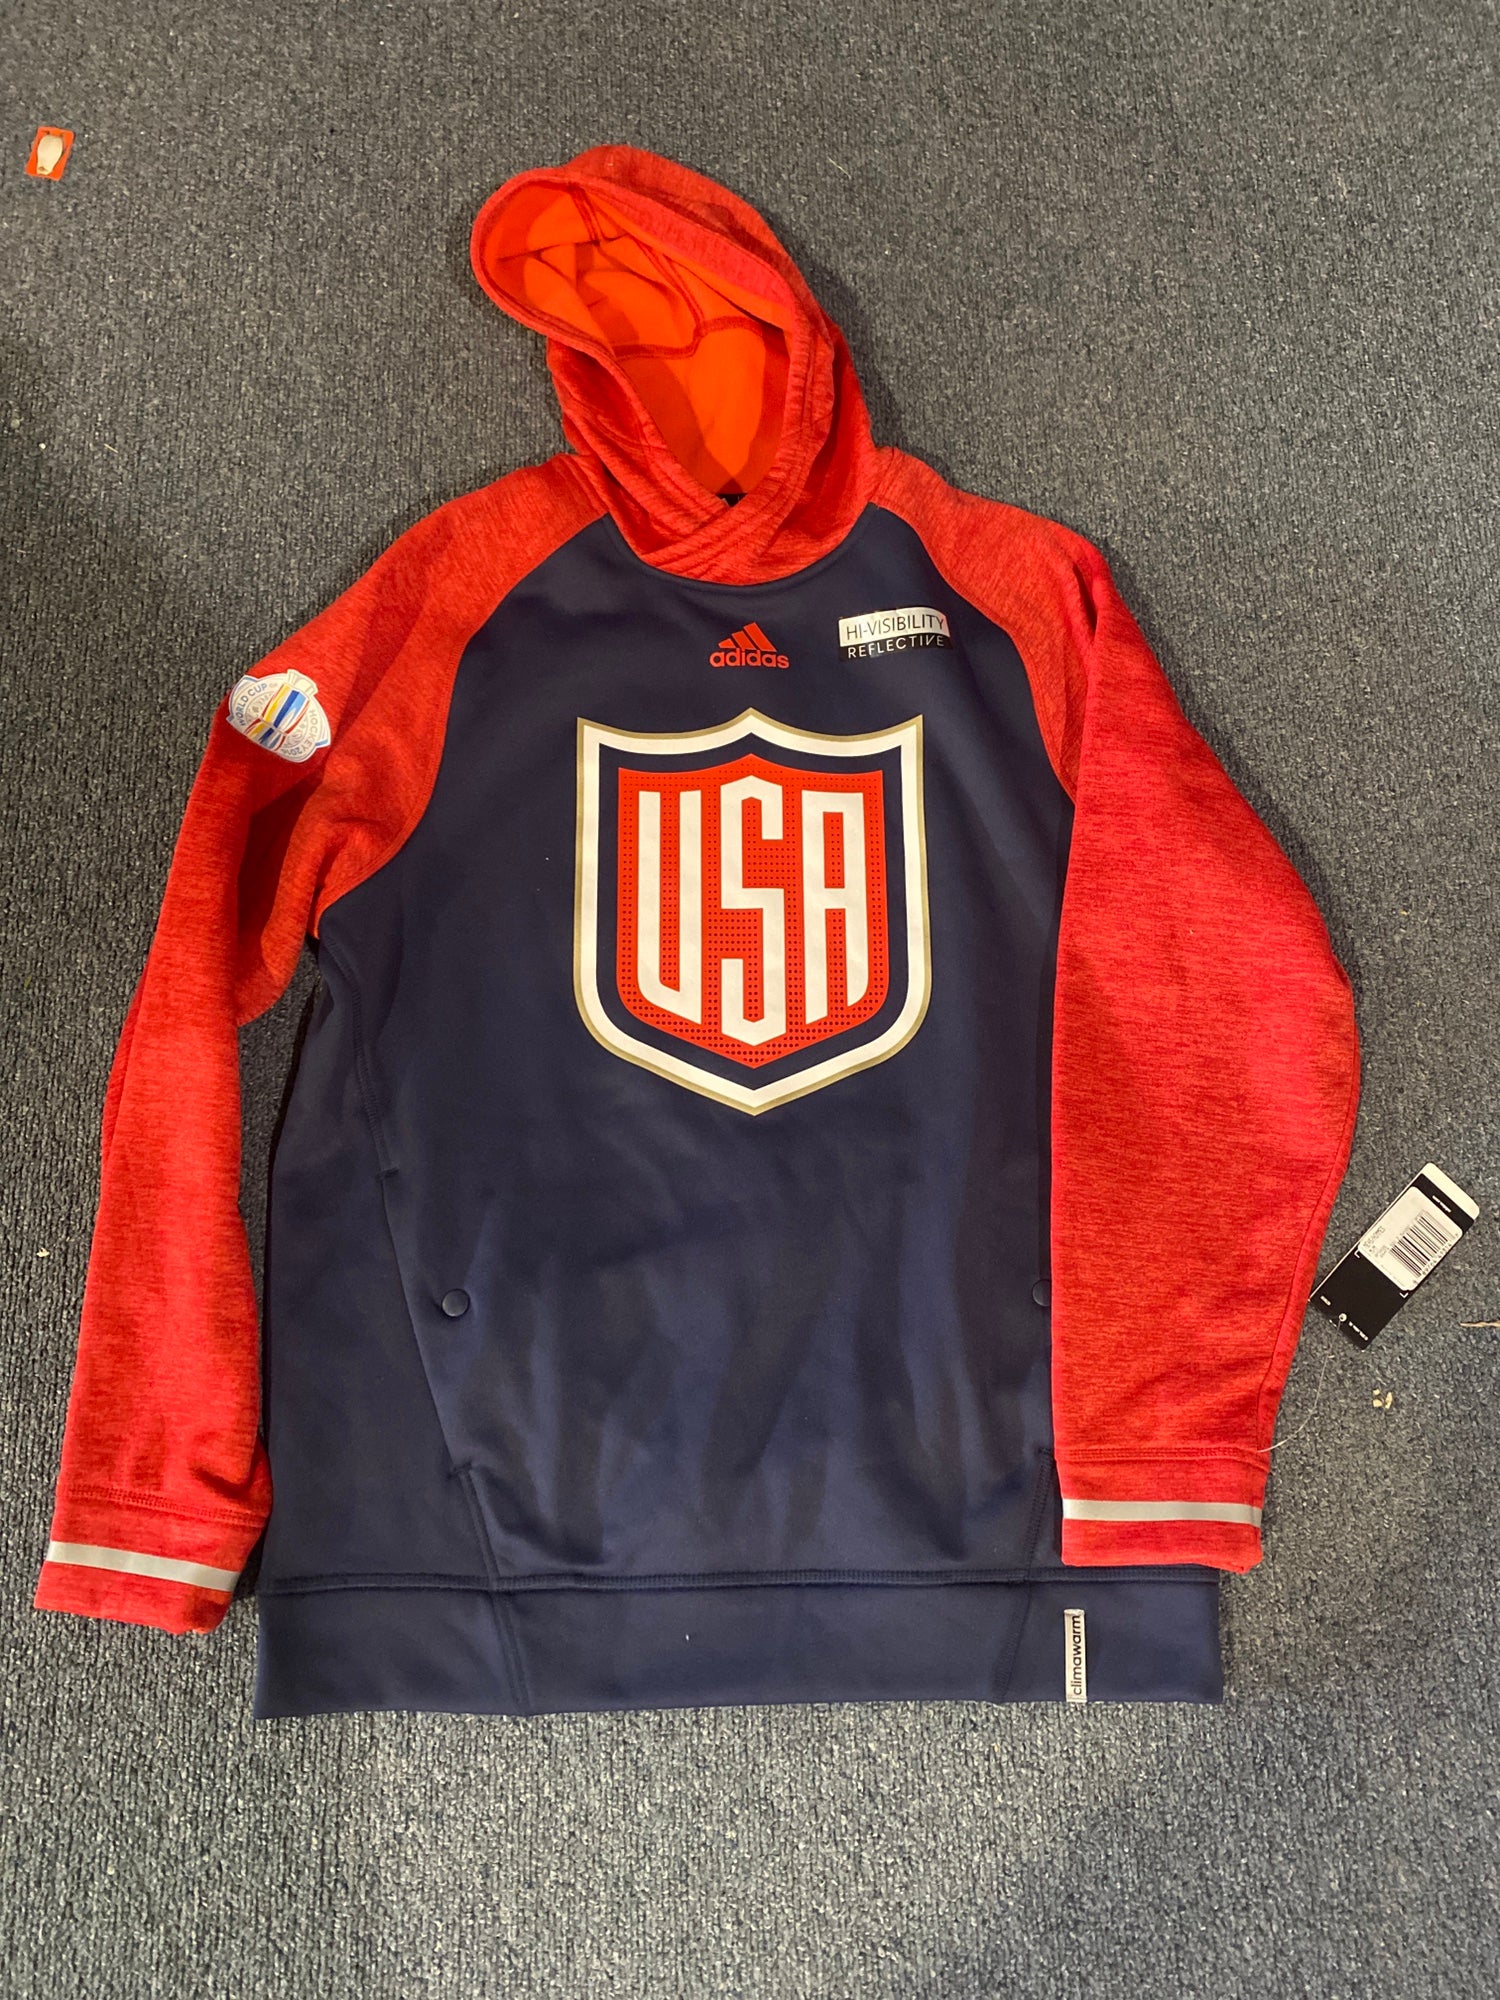 2016 World Cup of Hockey Team USA Adidas Men's Premier White Jersey